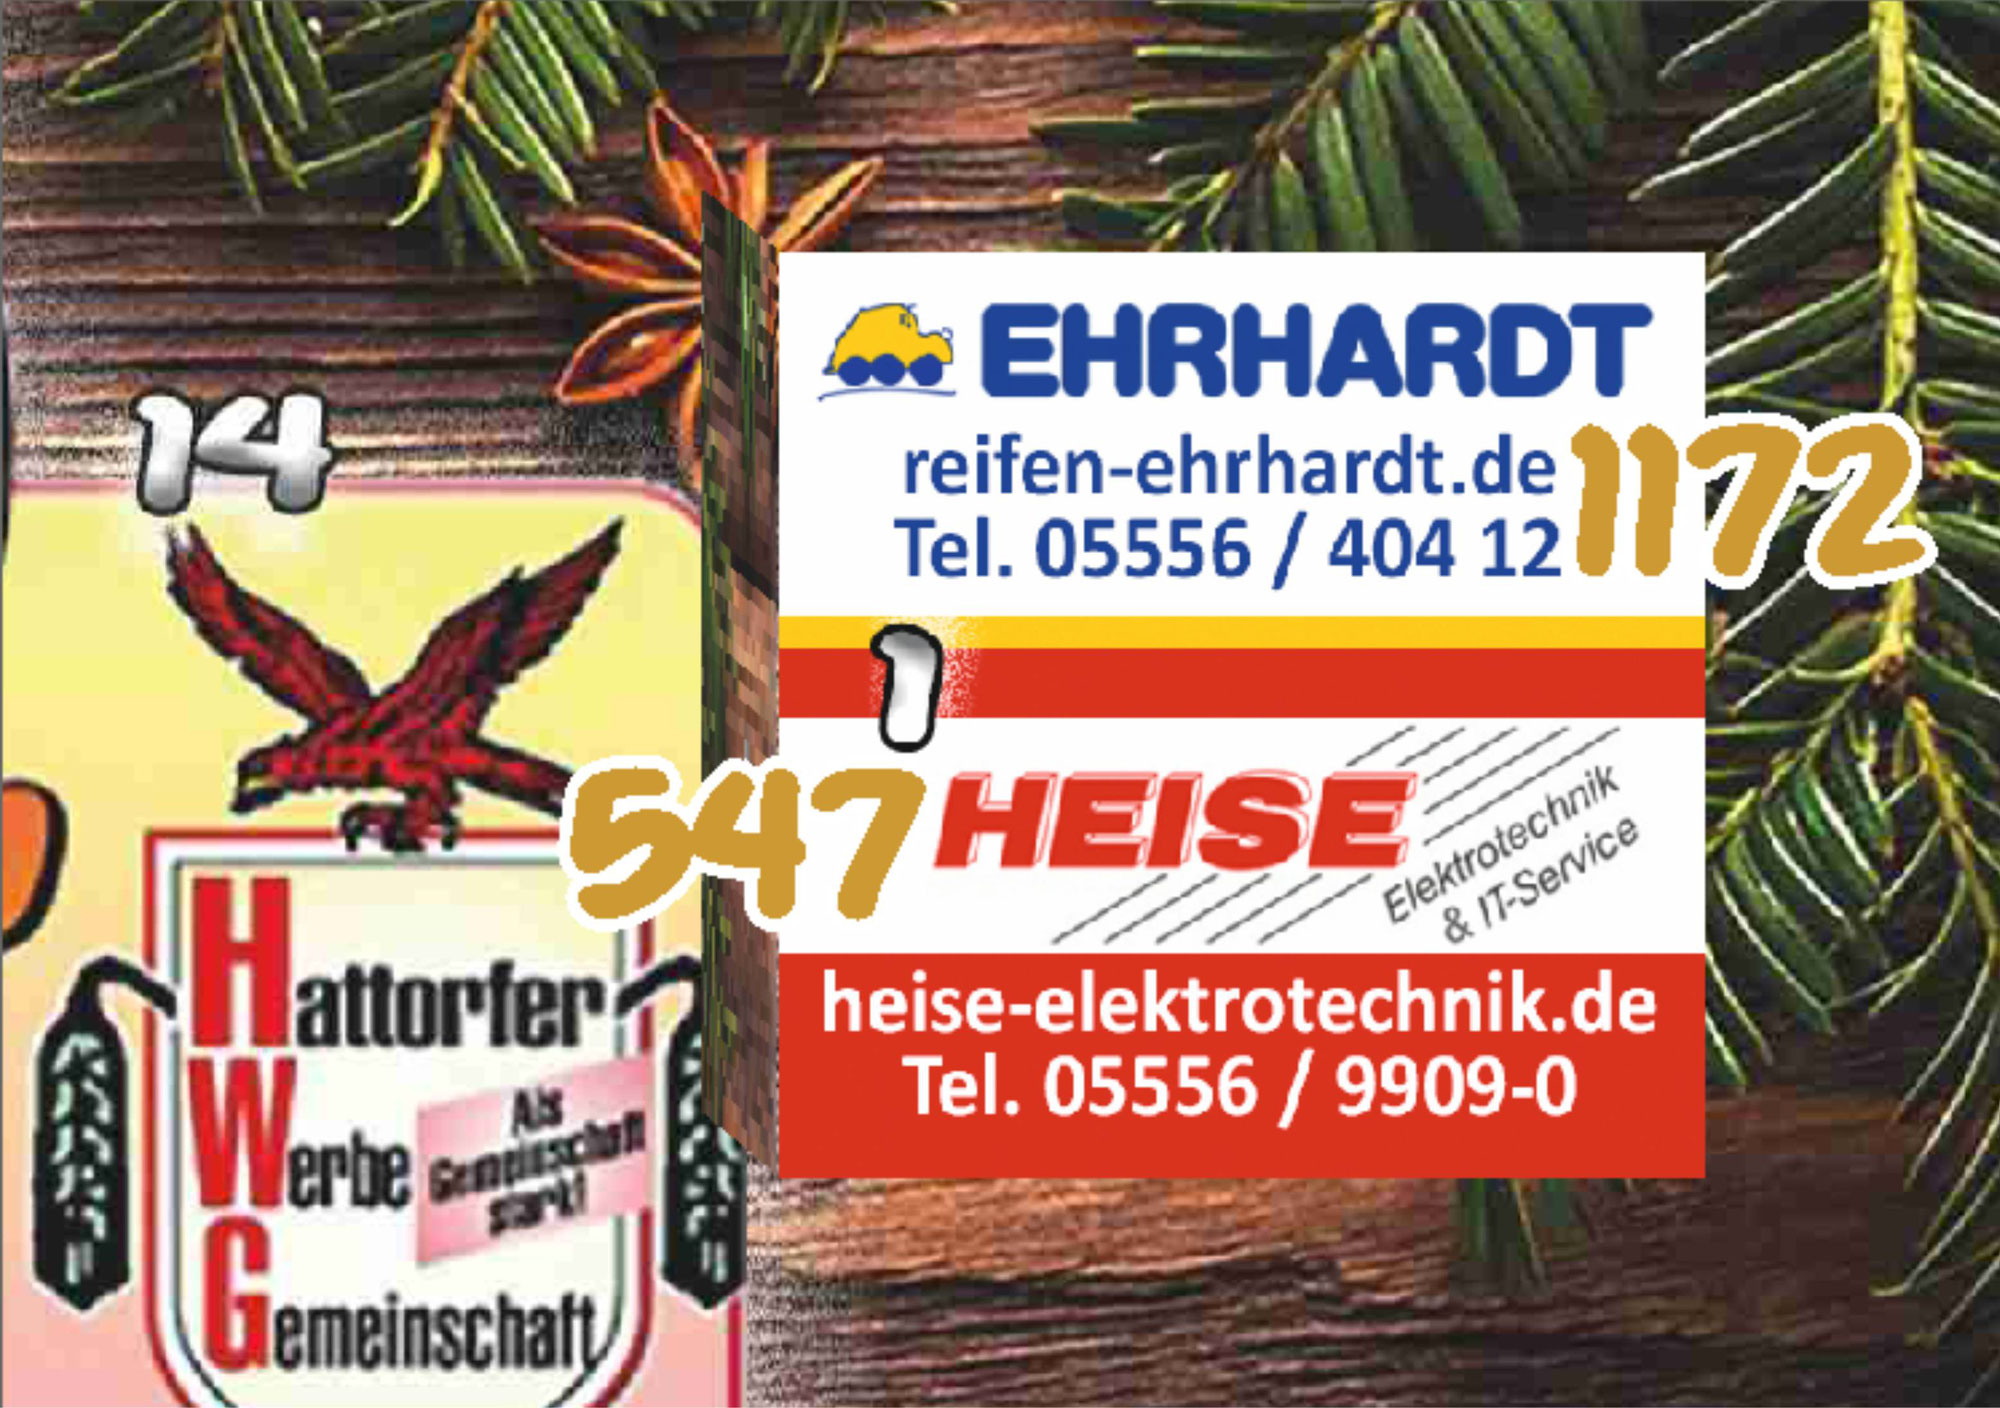 Ehrhardt Reifen + Autoservice & Heise-Elektrotechnik am 1.12. im Kalender!